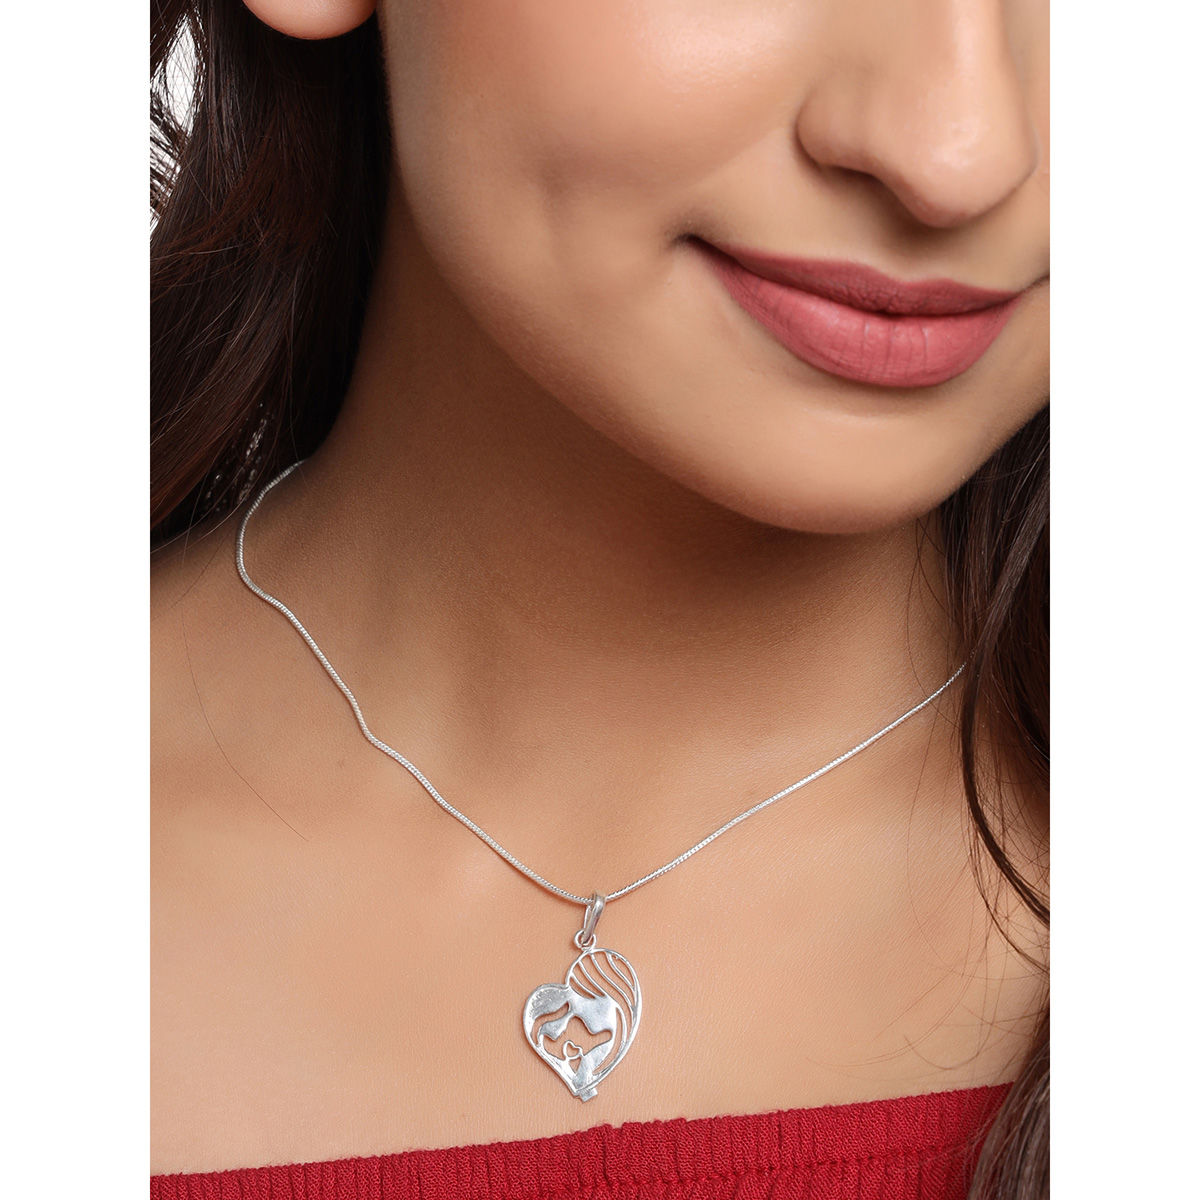 Buy 925 Silver Heart Solitaire Pendant for Women & Girls – CLARA